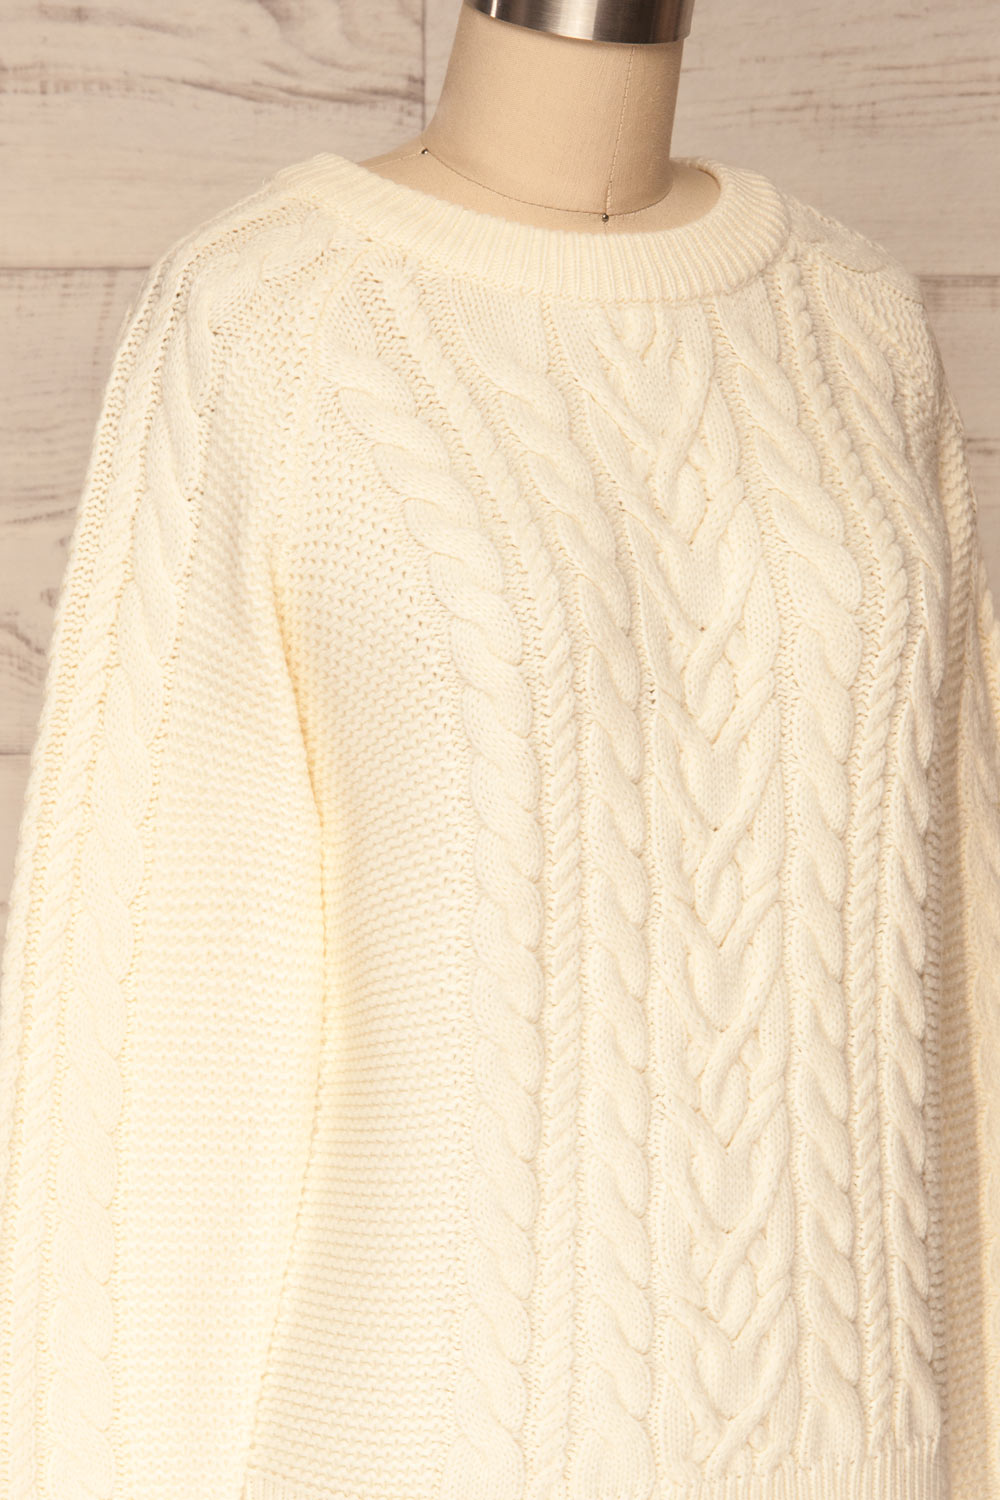 Imielin Ivory Knit Sweater side close up | La Petite Garçonne